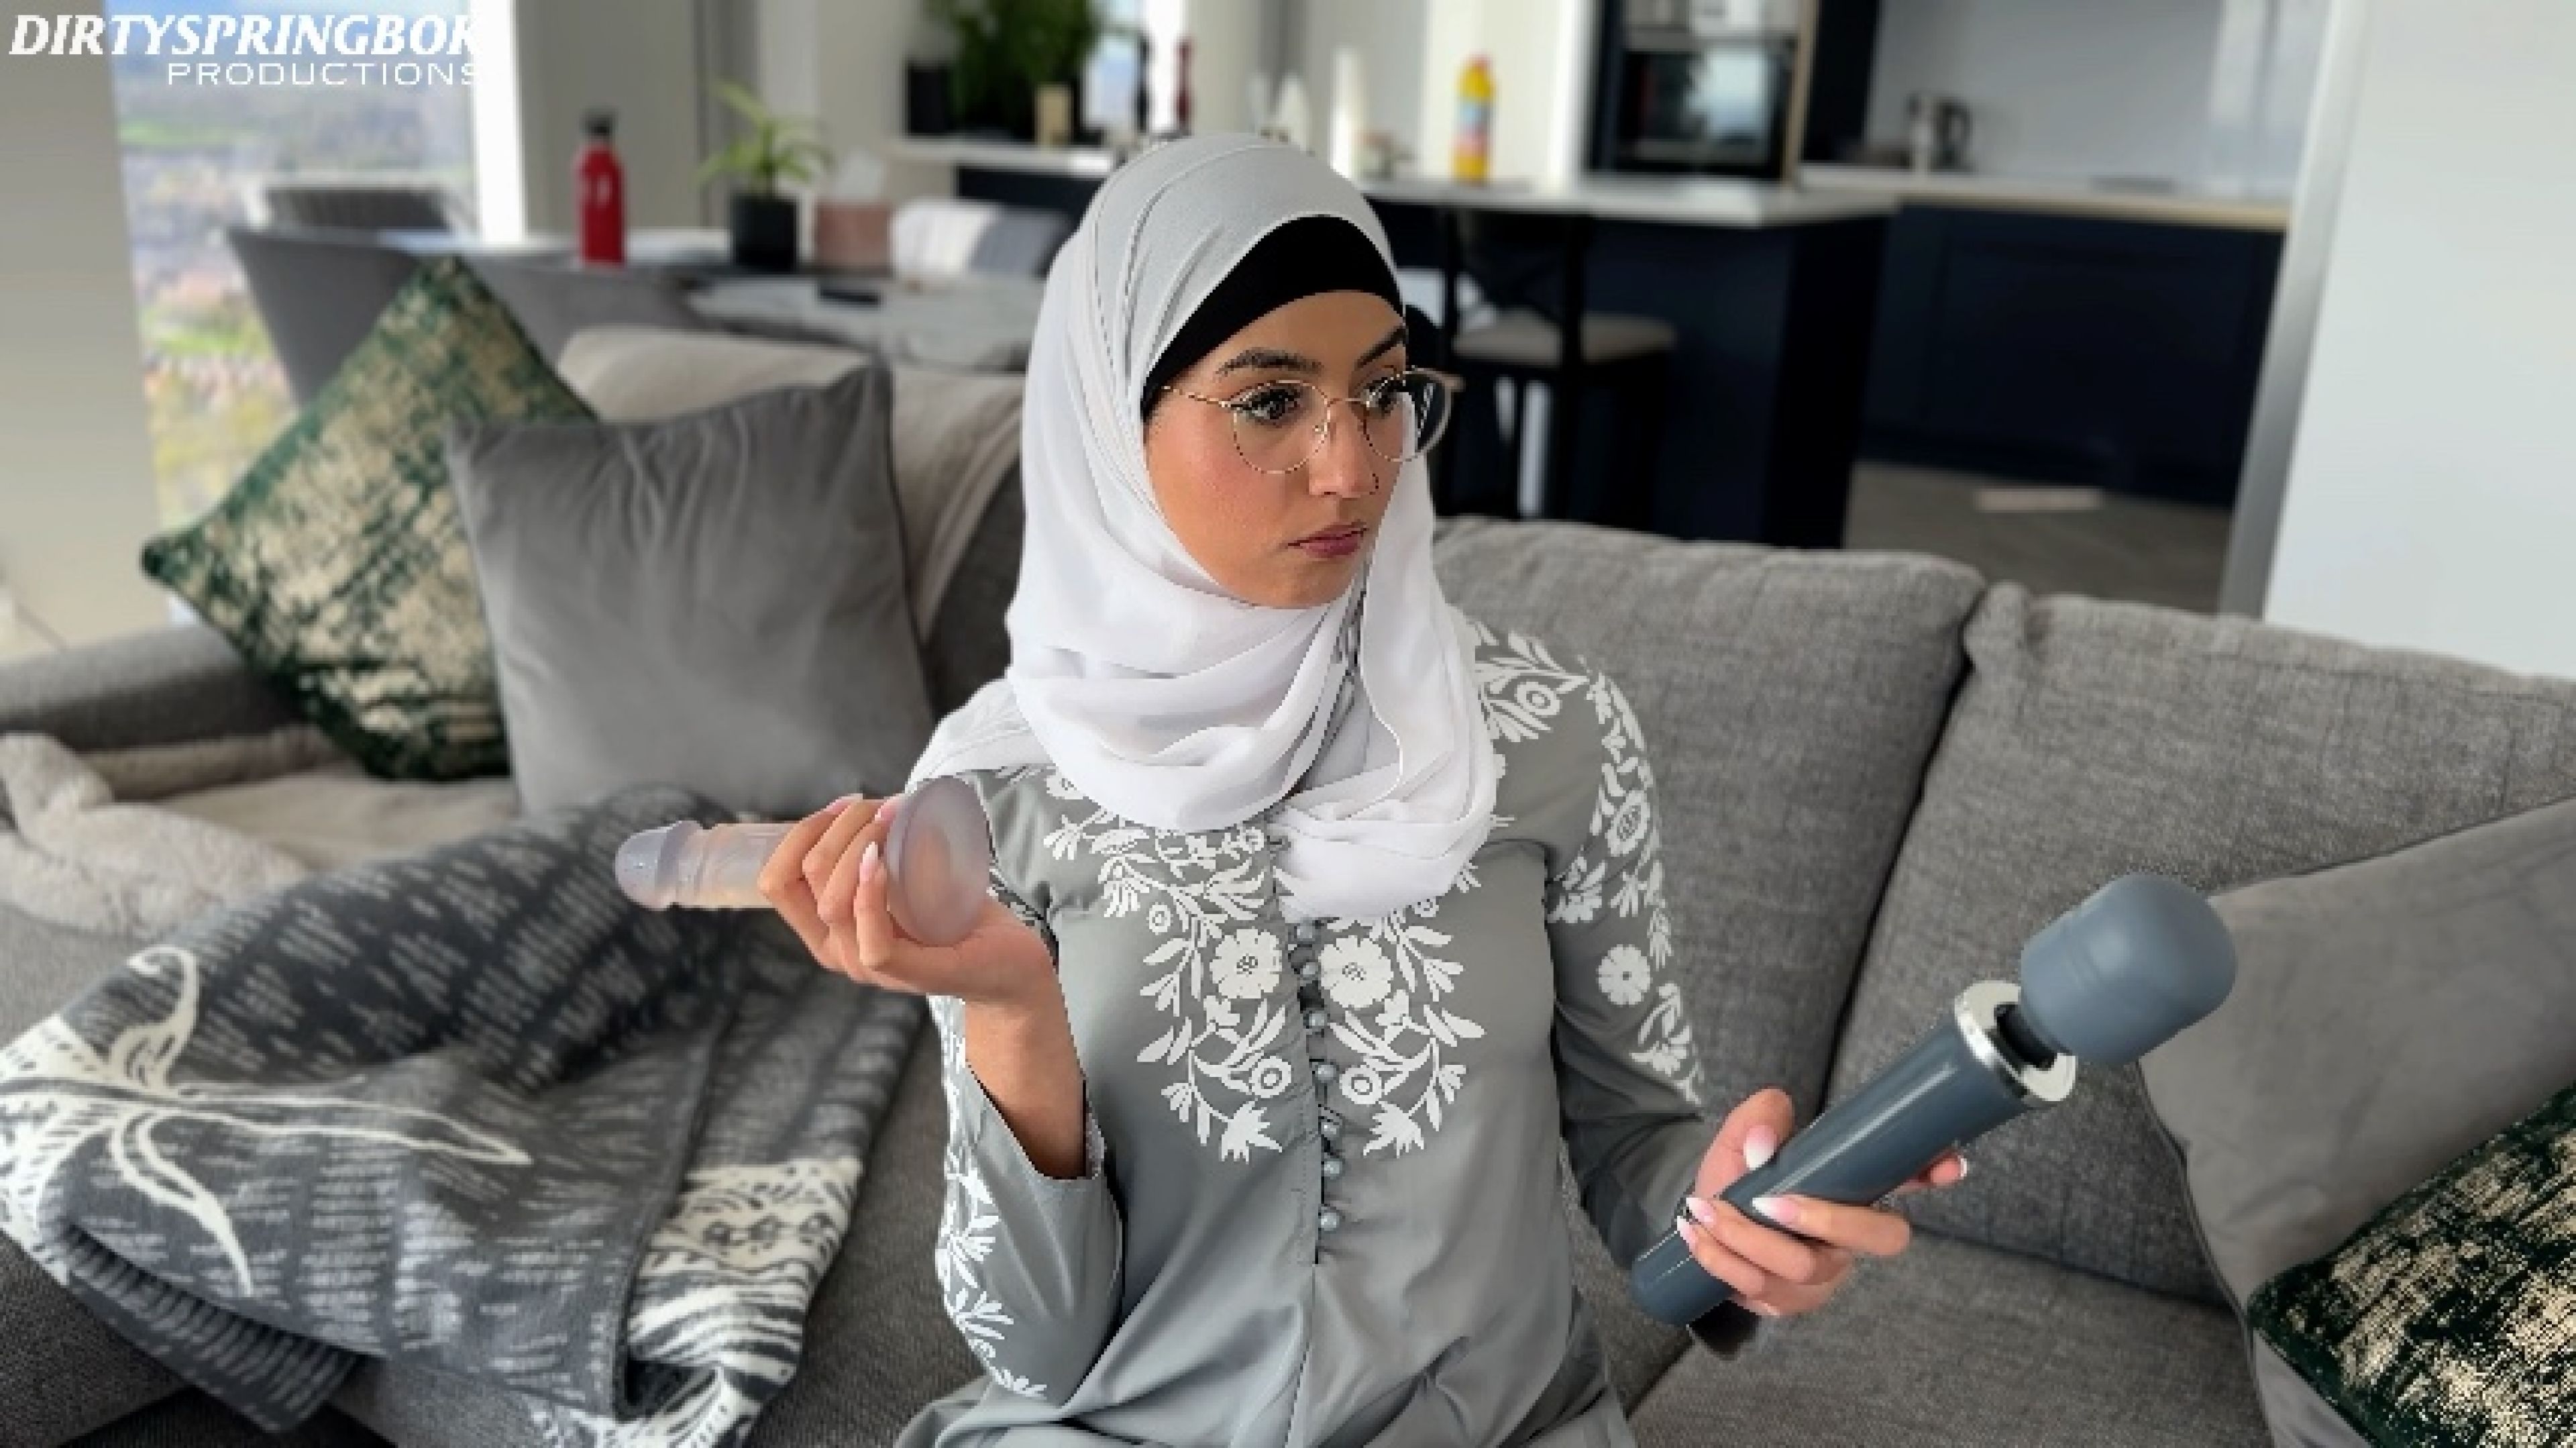 Hijabi maid discovers sex toys